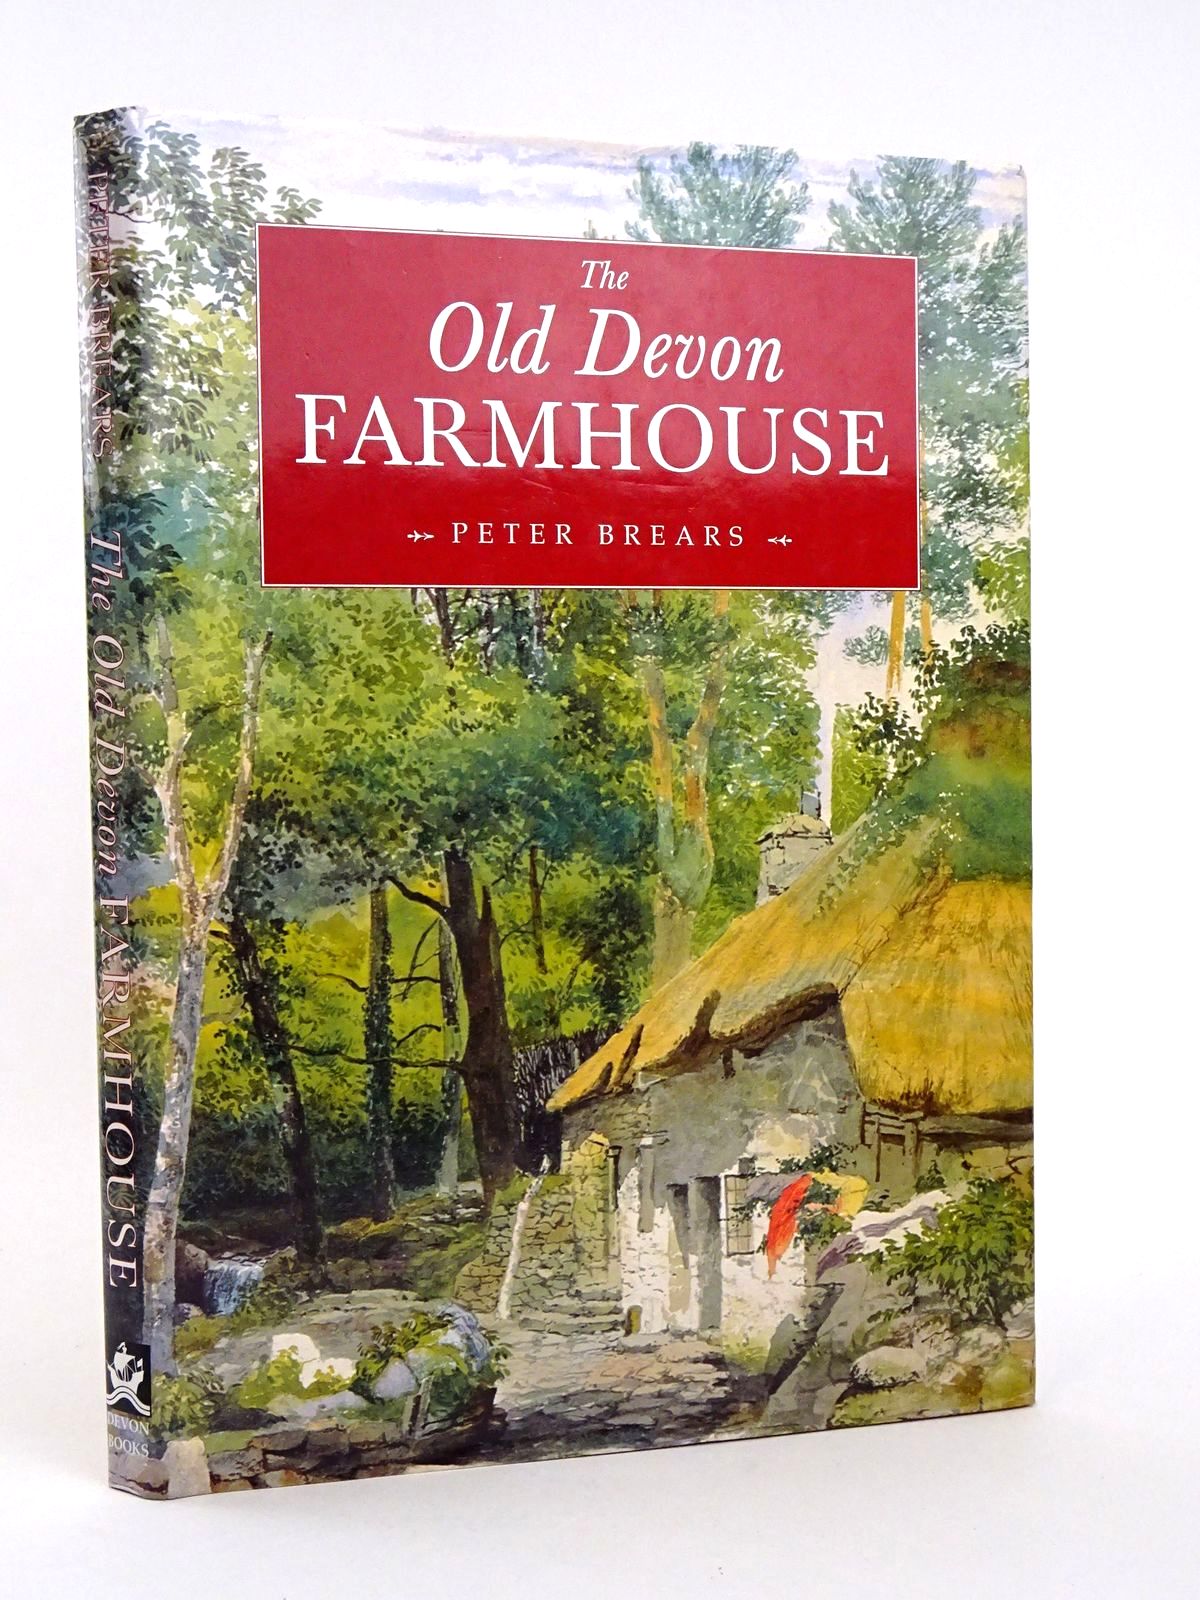 The Old Devon Farmhouse